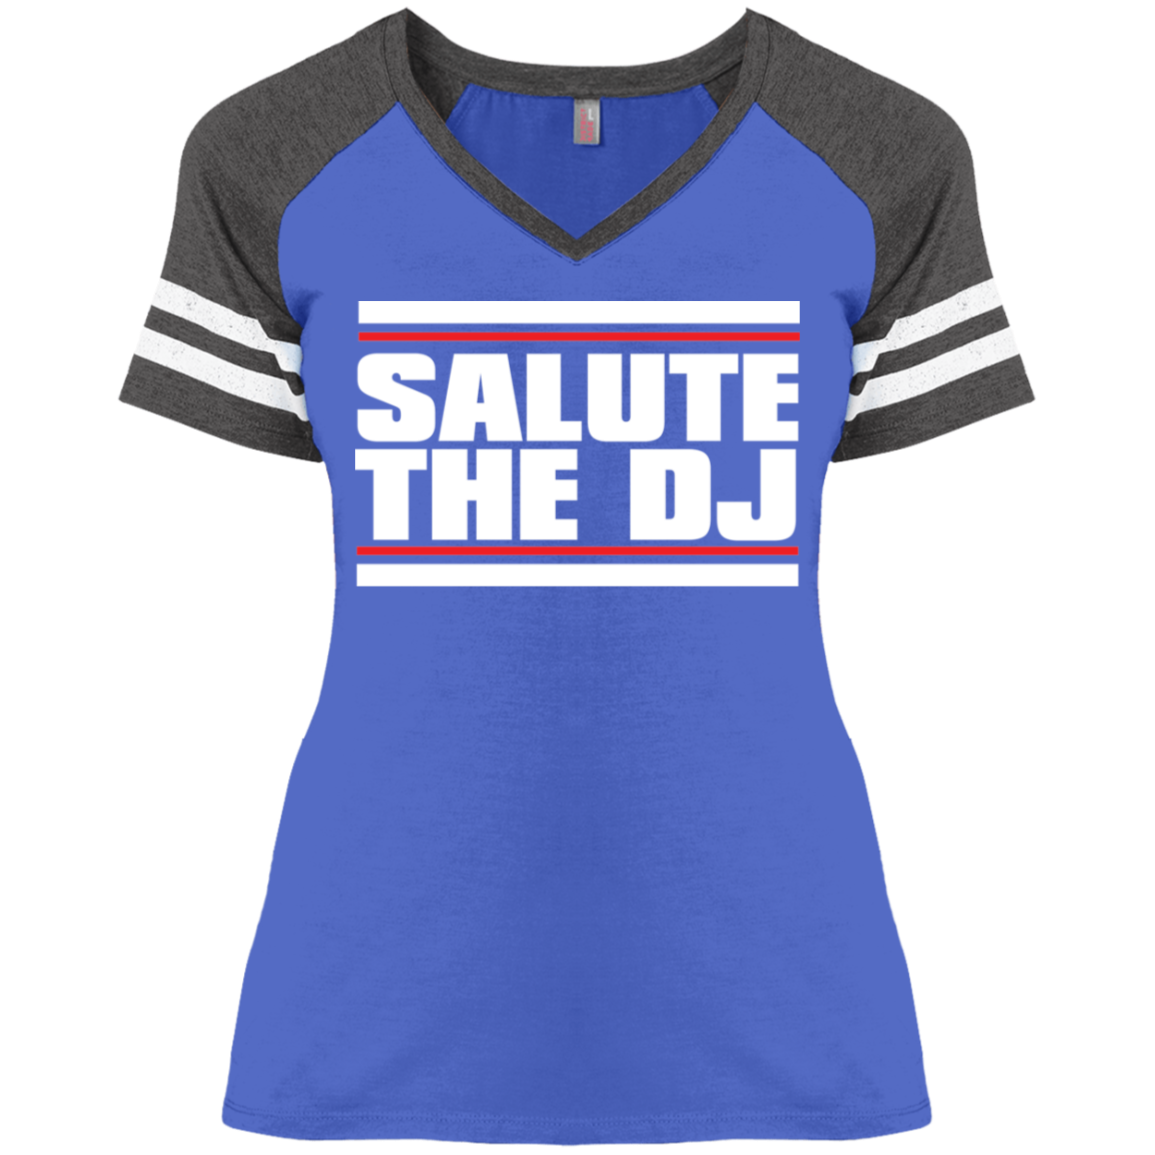 Salute The DJ District Ladies' Game V-Neck T-Shirt